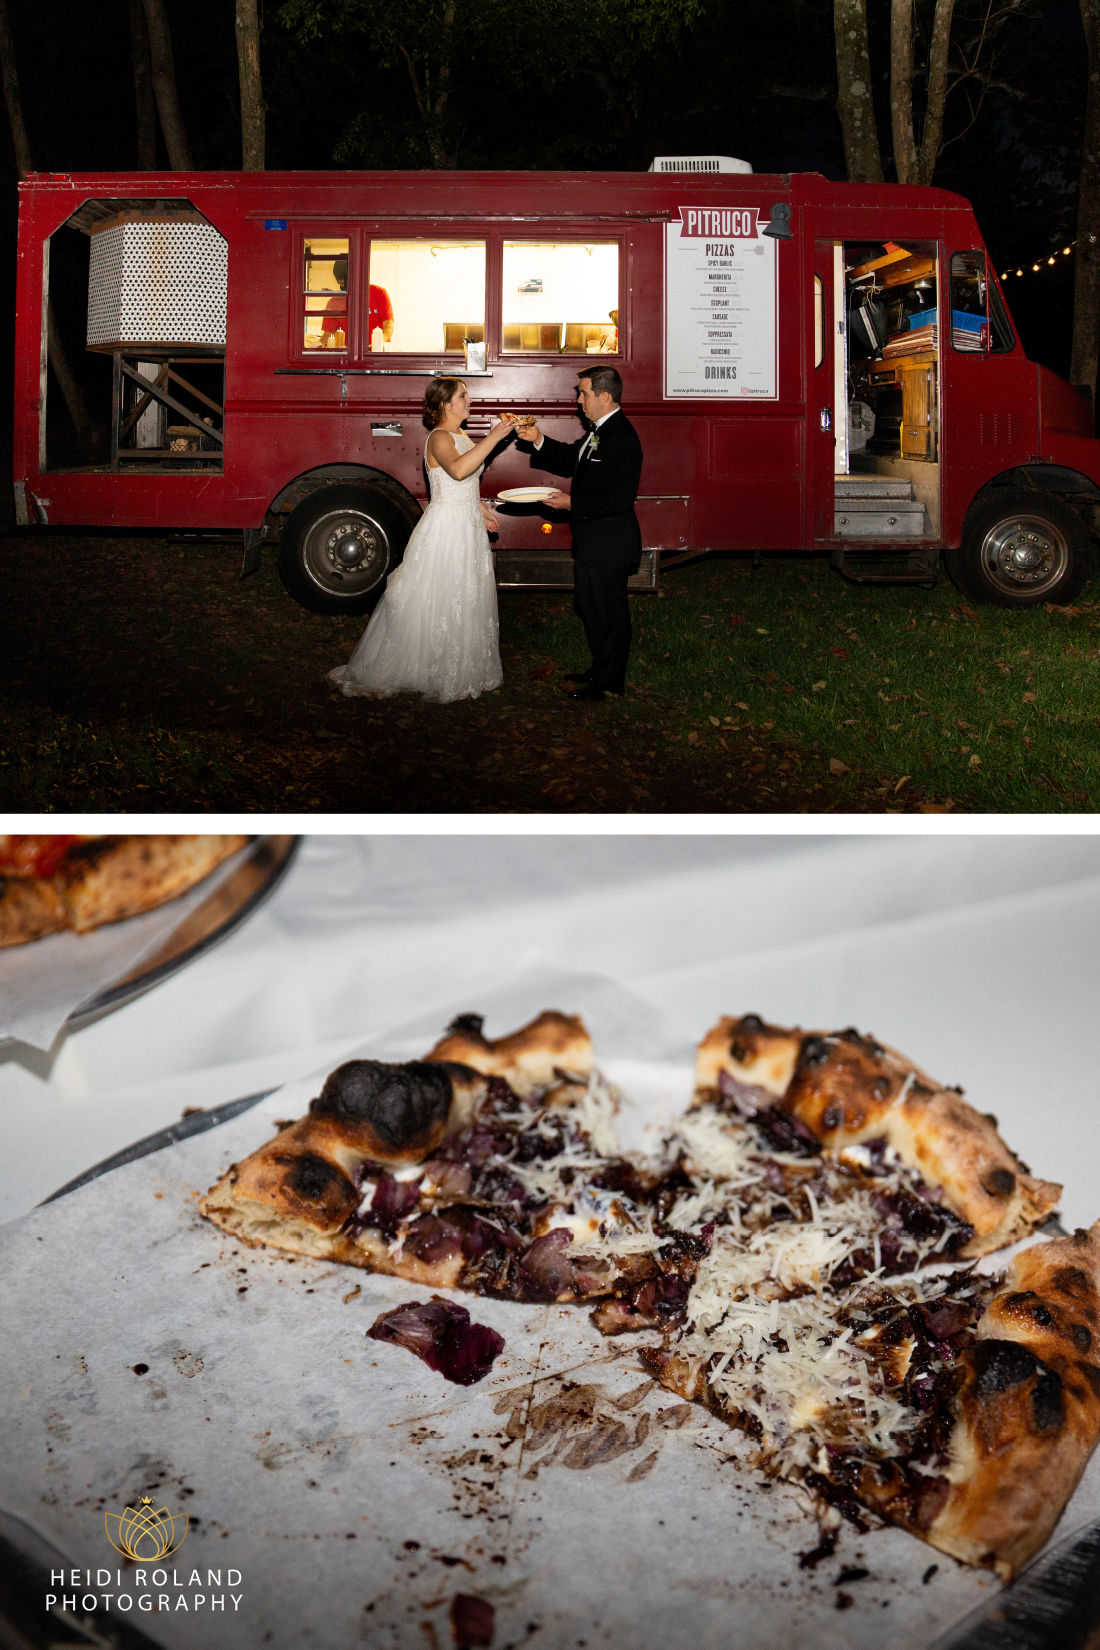 pitruco pizza truck at wedding